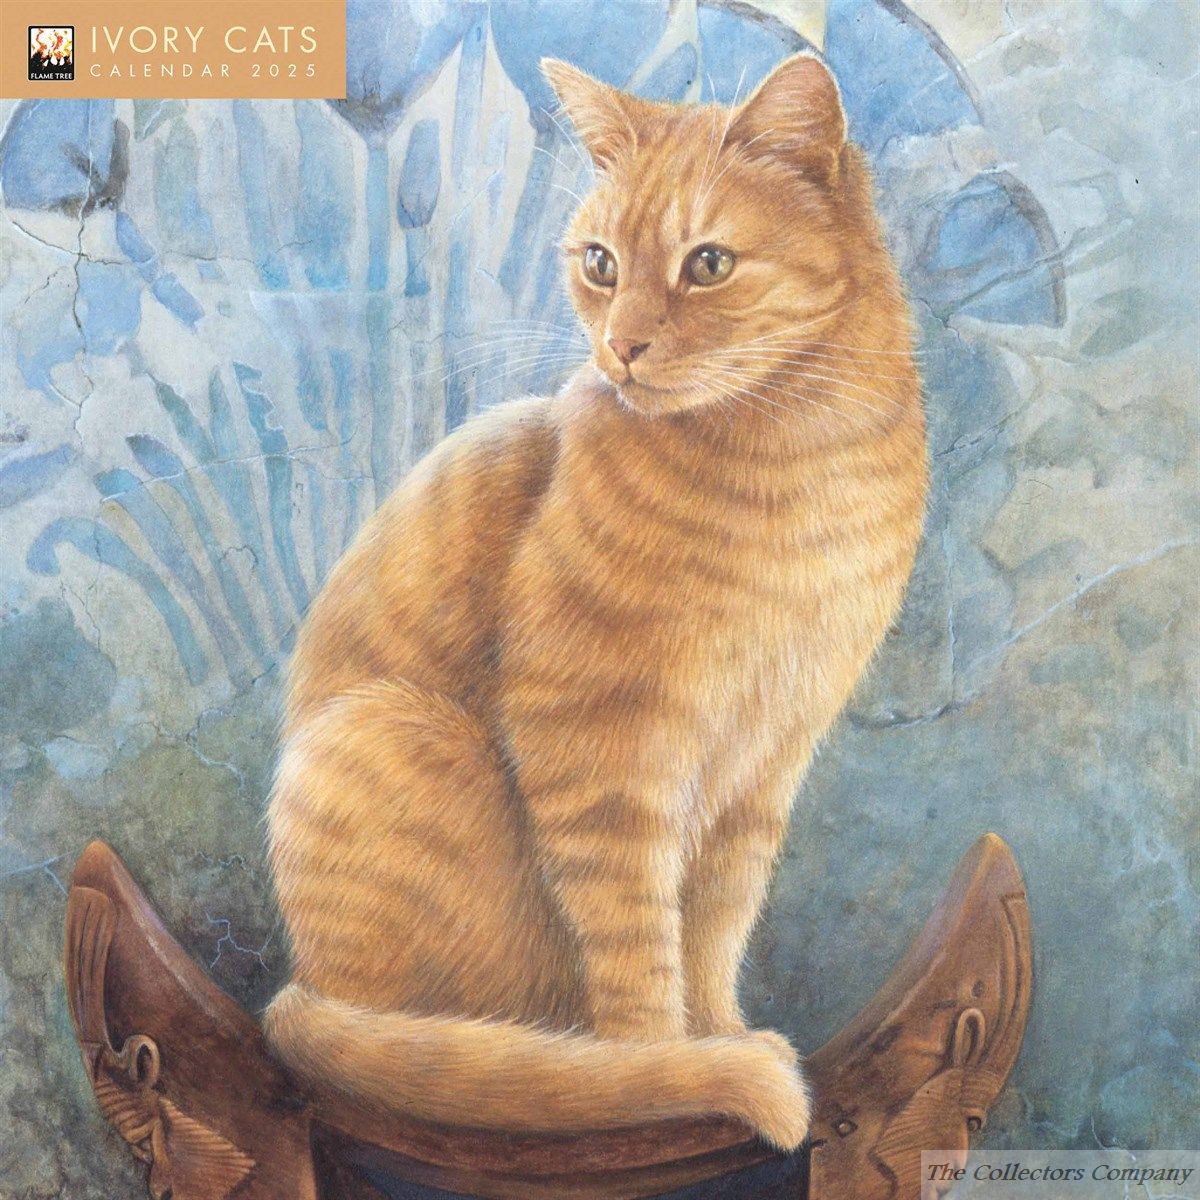 Ivory Cats Calendar 2025